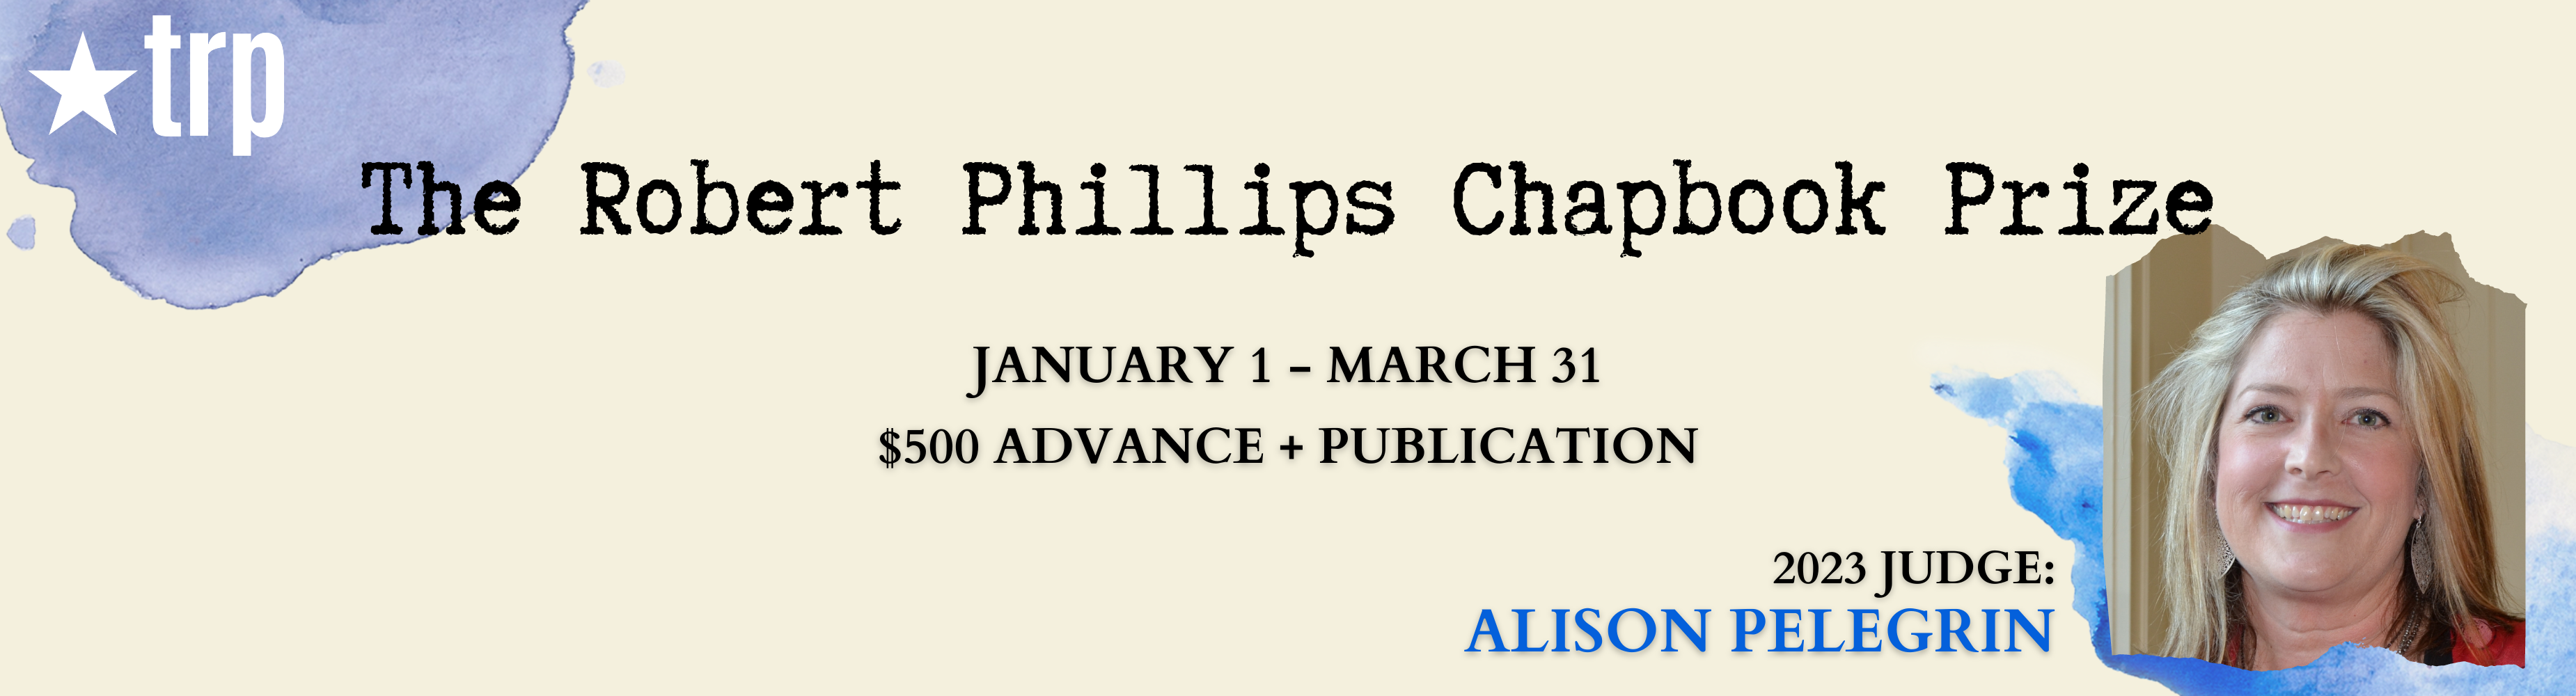 The Robert Phillips Chapbook Prize. January 1 through March 31. $500 advance + publication. Judge: Alison Pelegrin.